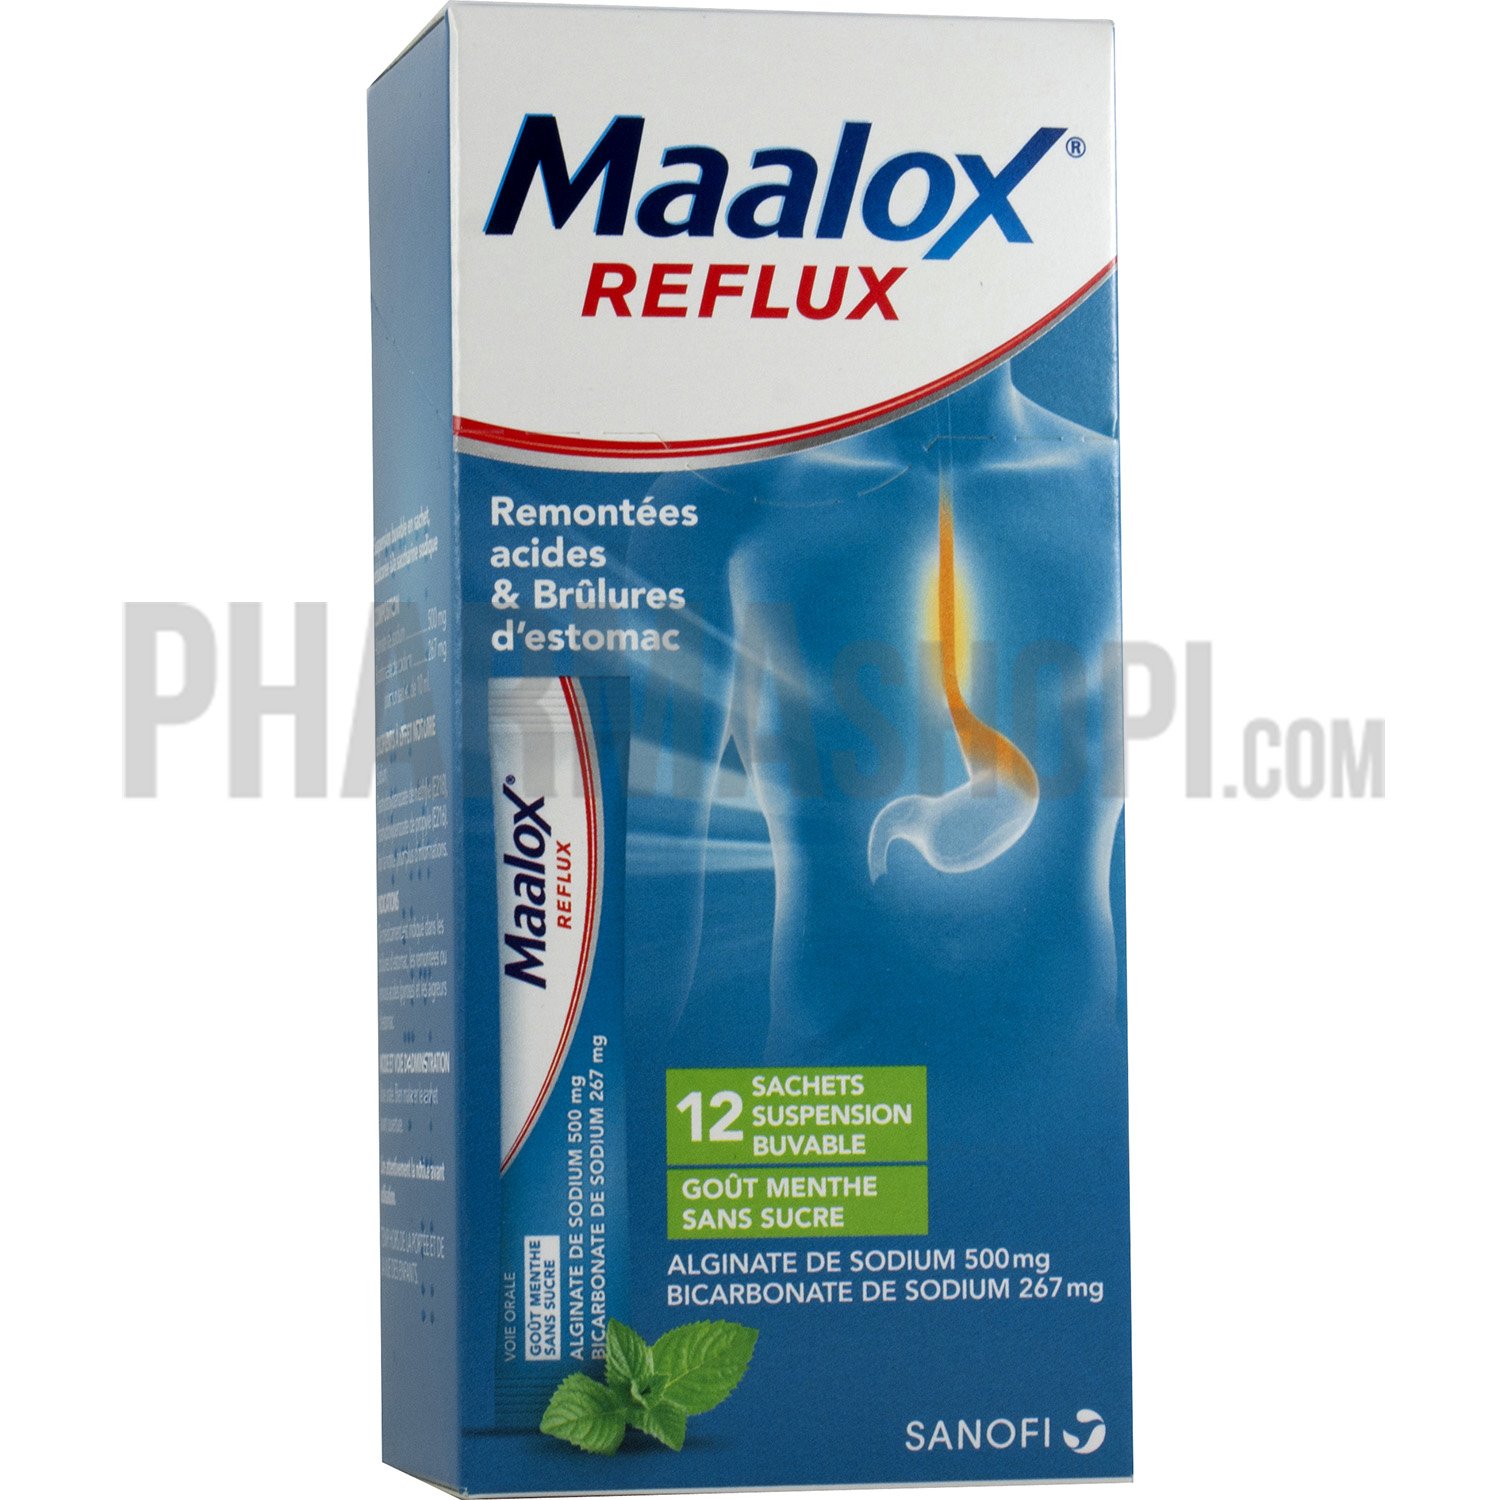 Maalox reflux suspension buvable en sachet - boite de 12 sachets